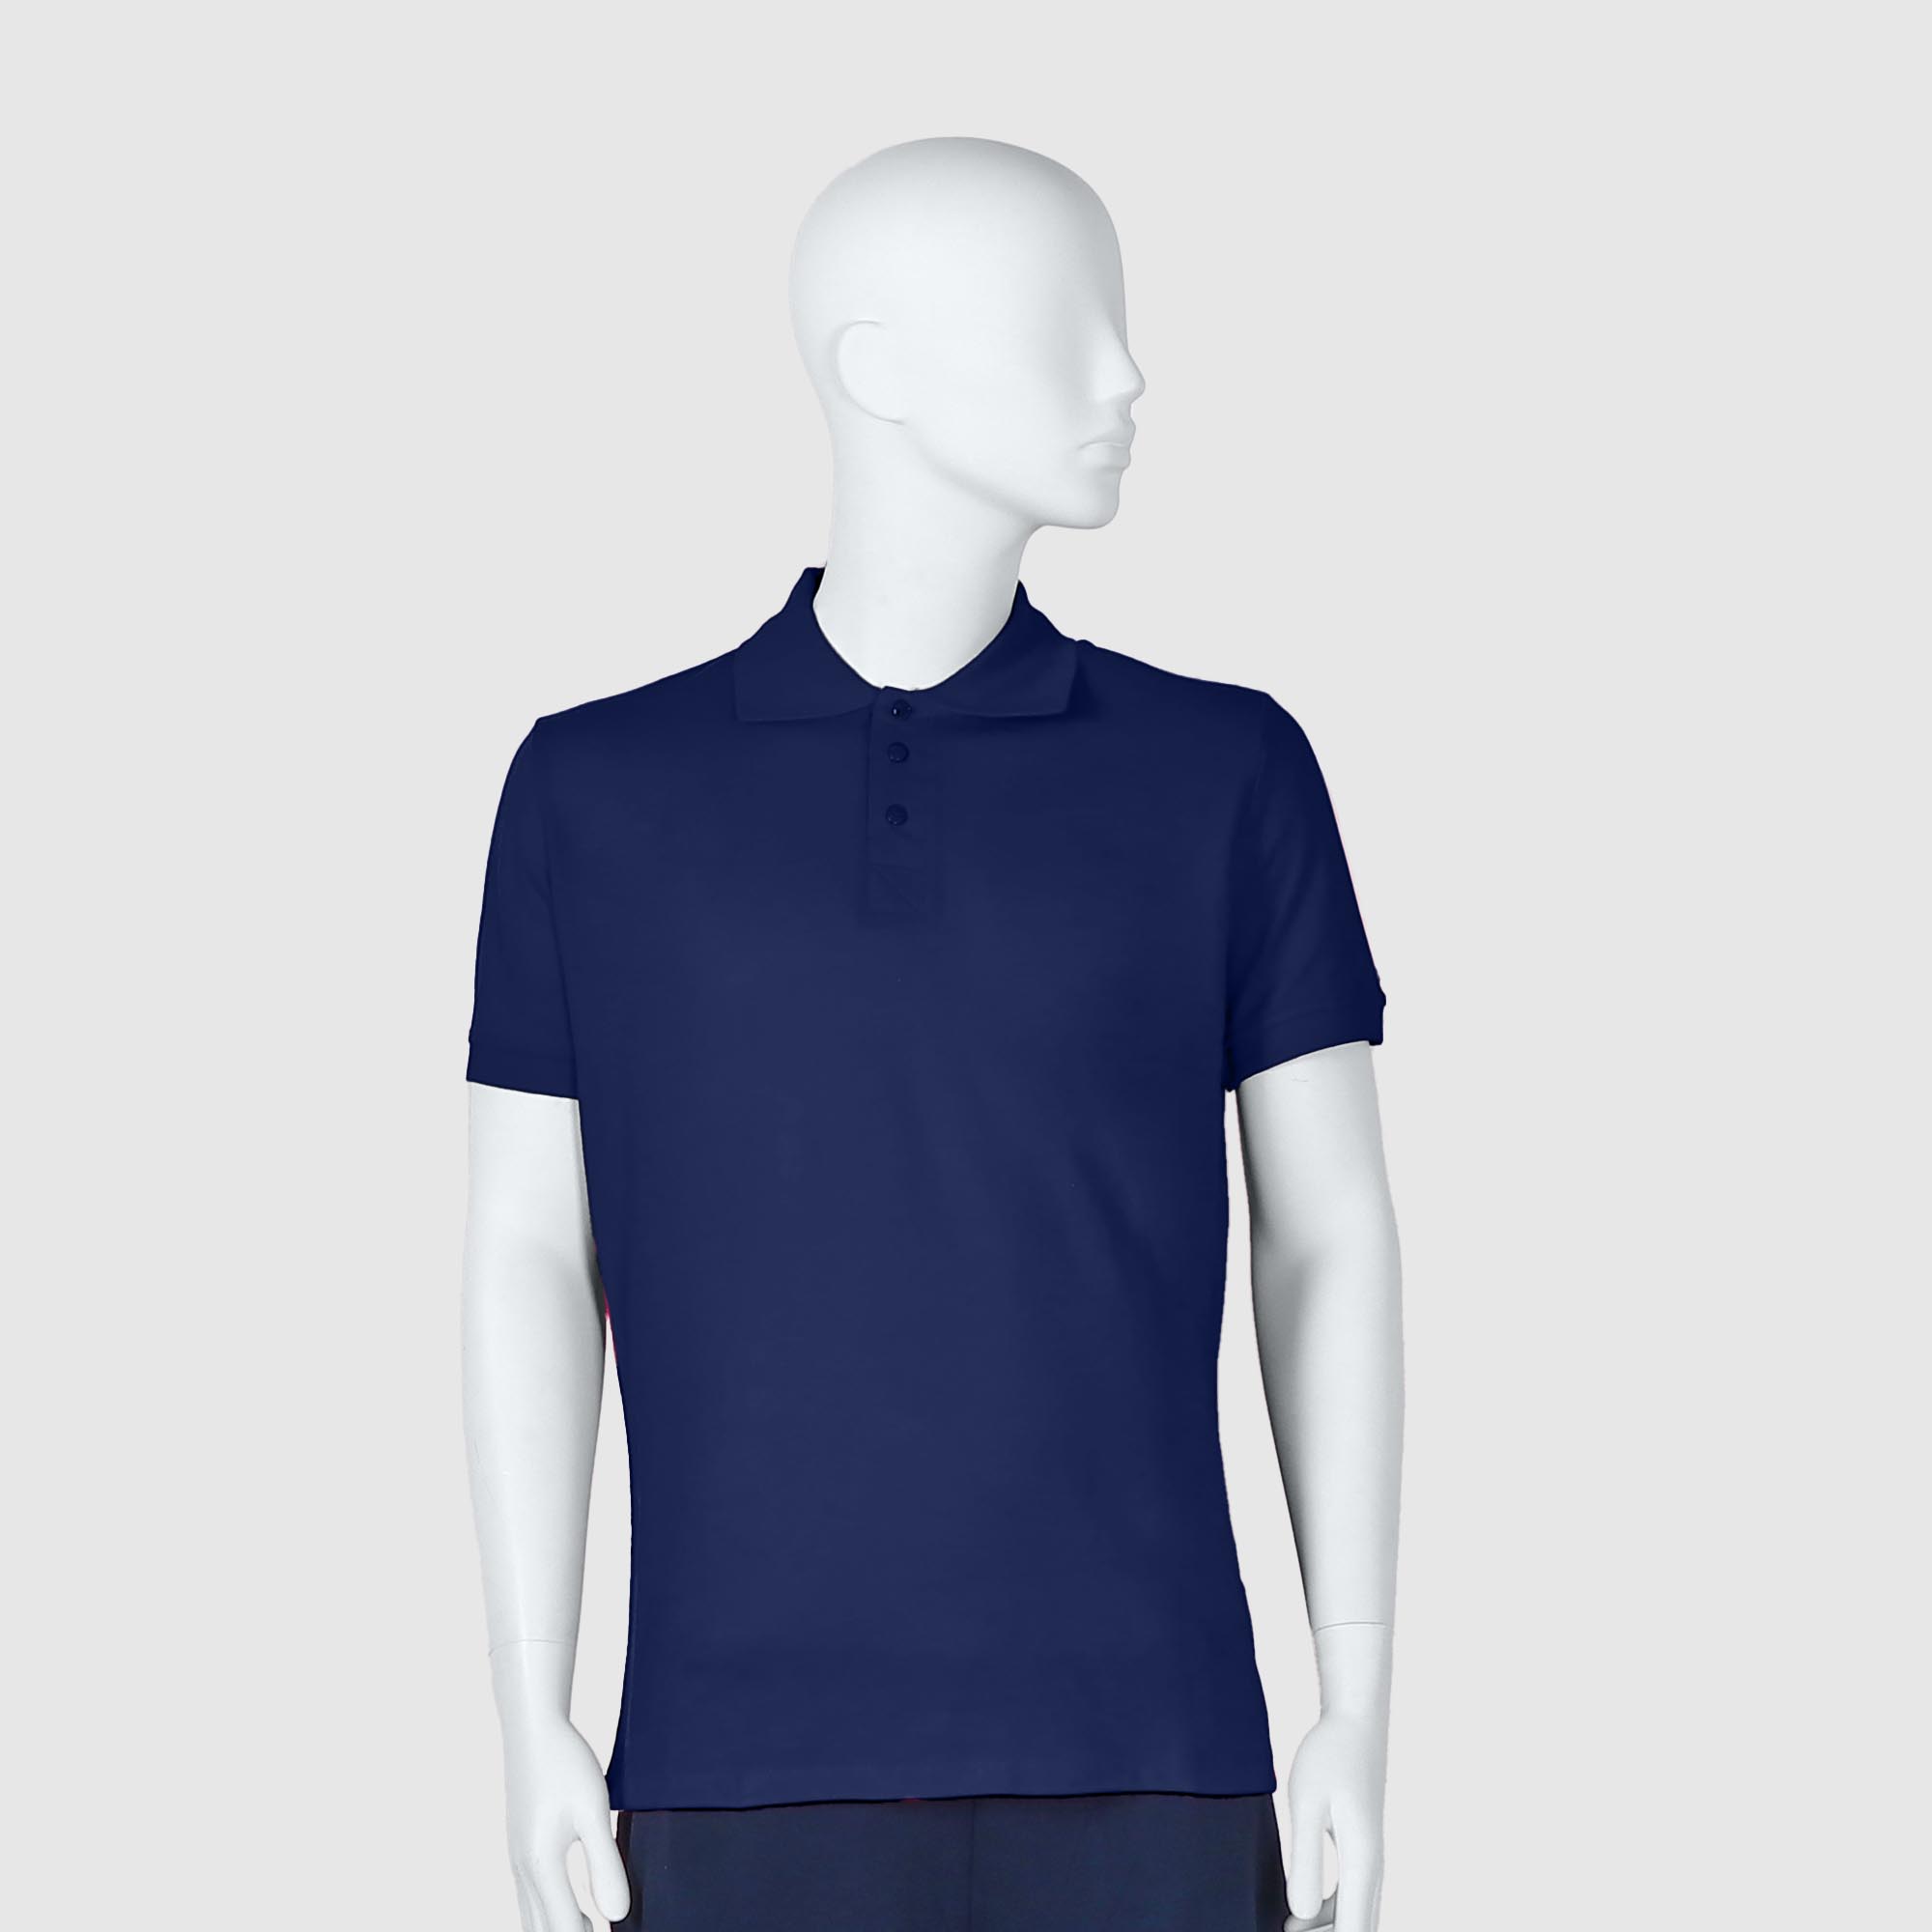 Мужская футболка-поло Diva Teks синяя (DTD-10), цвет синий, размер 54-56 - фото 1